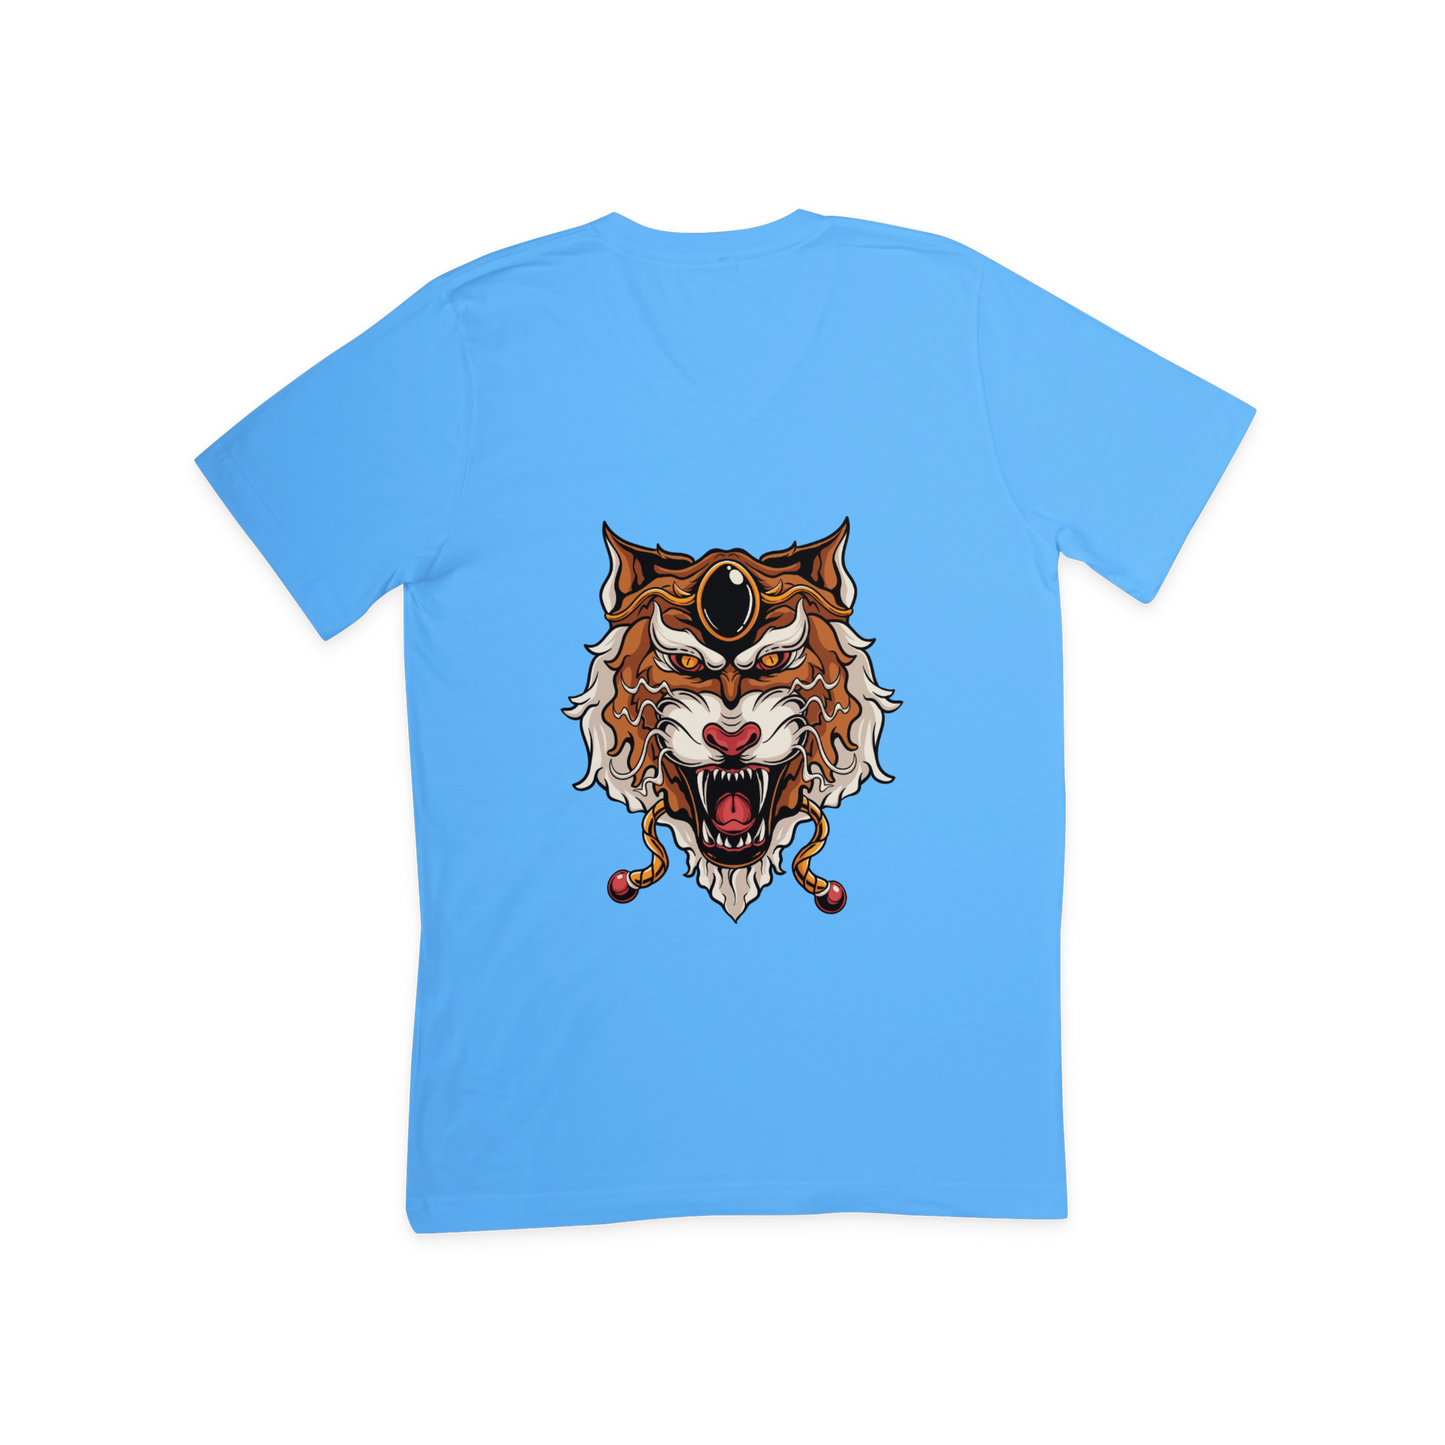 Tiger Design T shirt